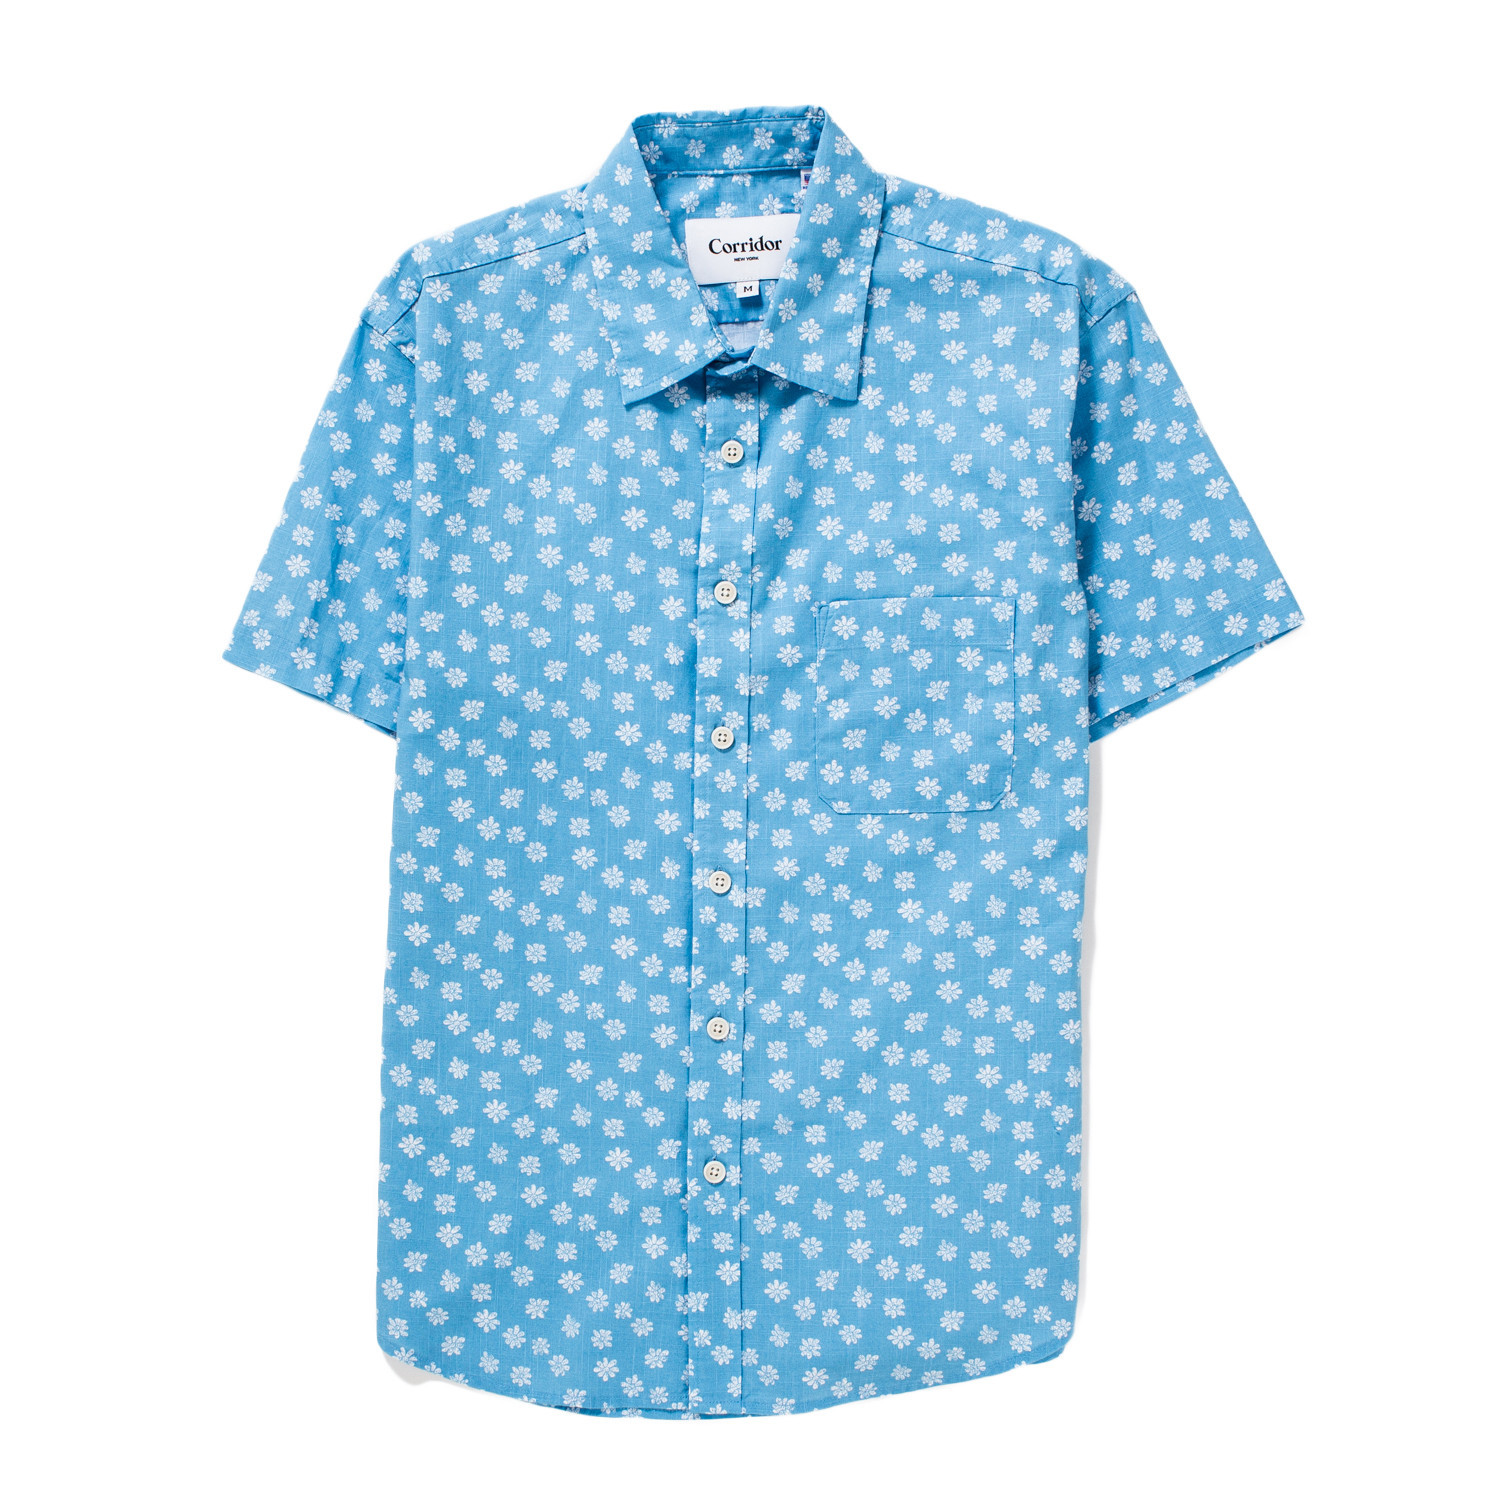 Short-sleeved shirts in fun prints from New York menswear brand Corridor.